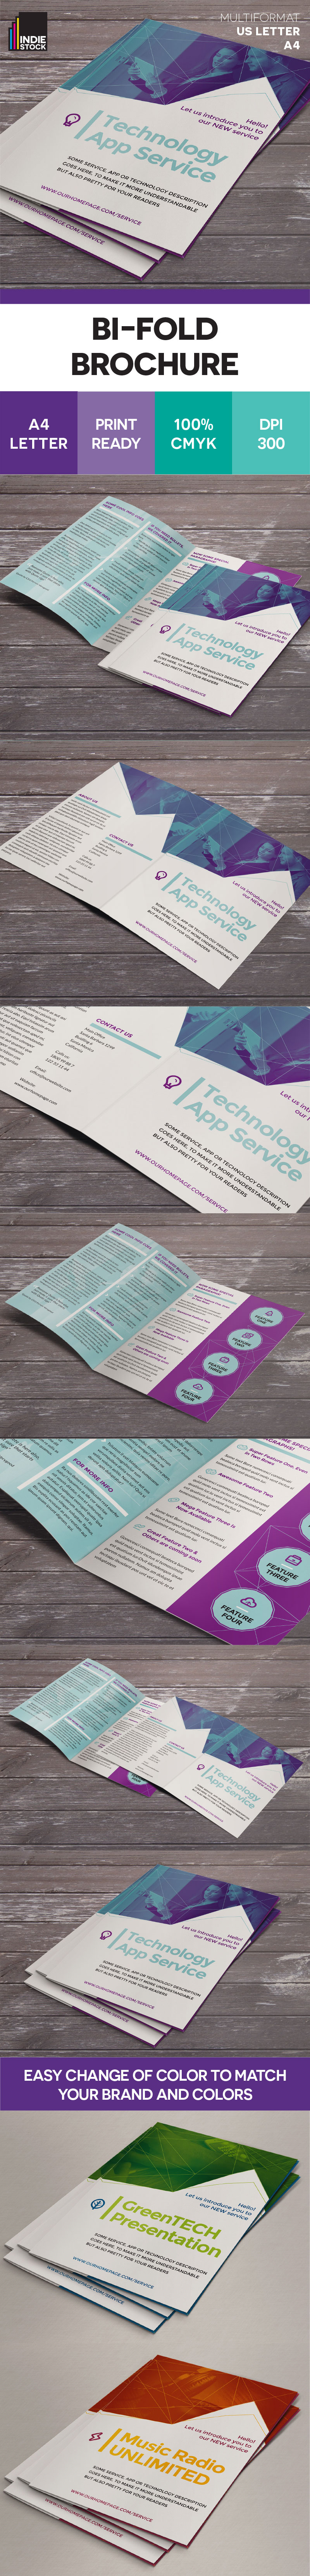 InDesign Bi-fold Brochure Template